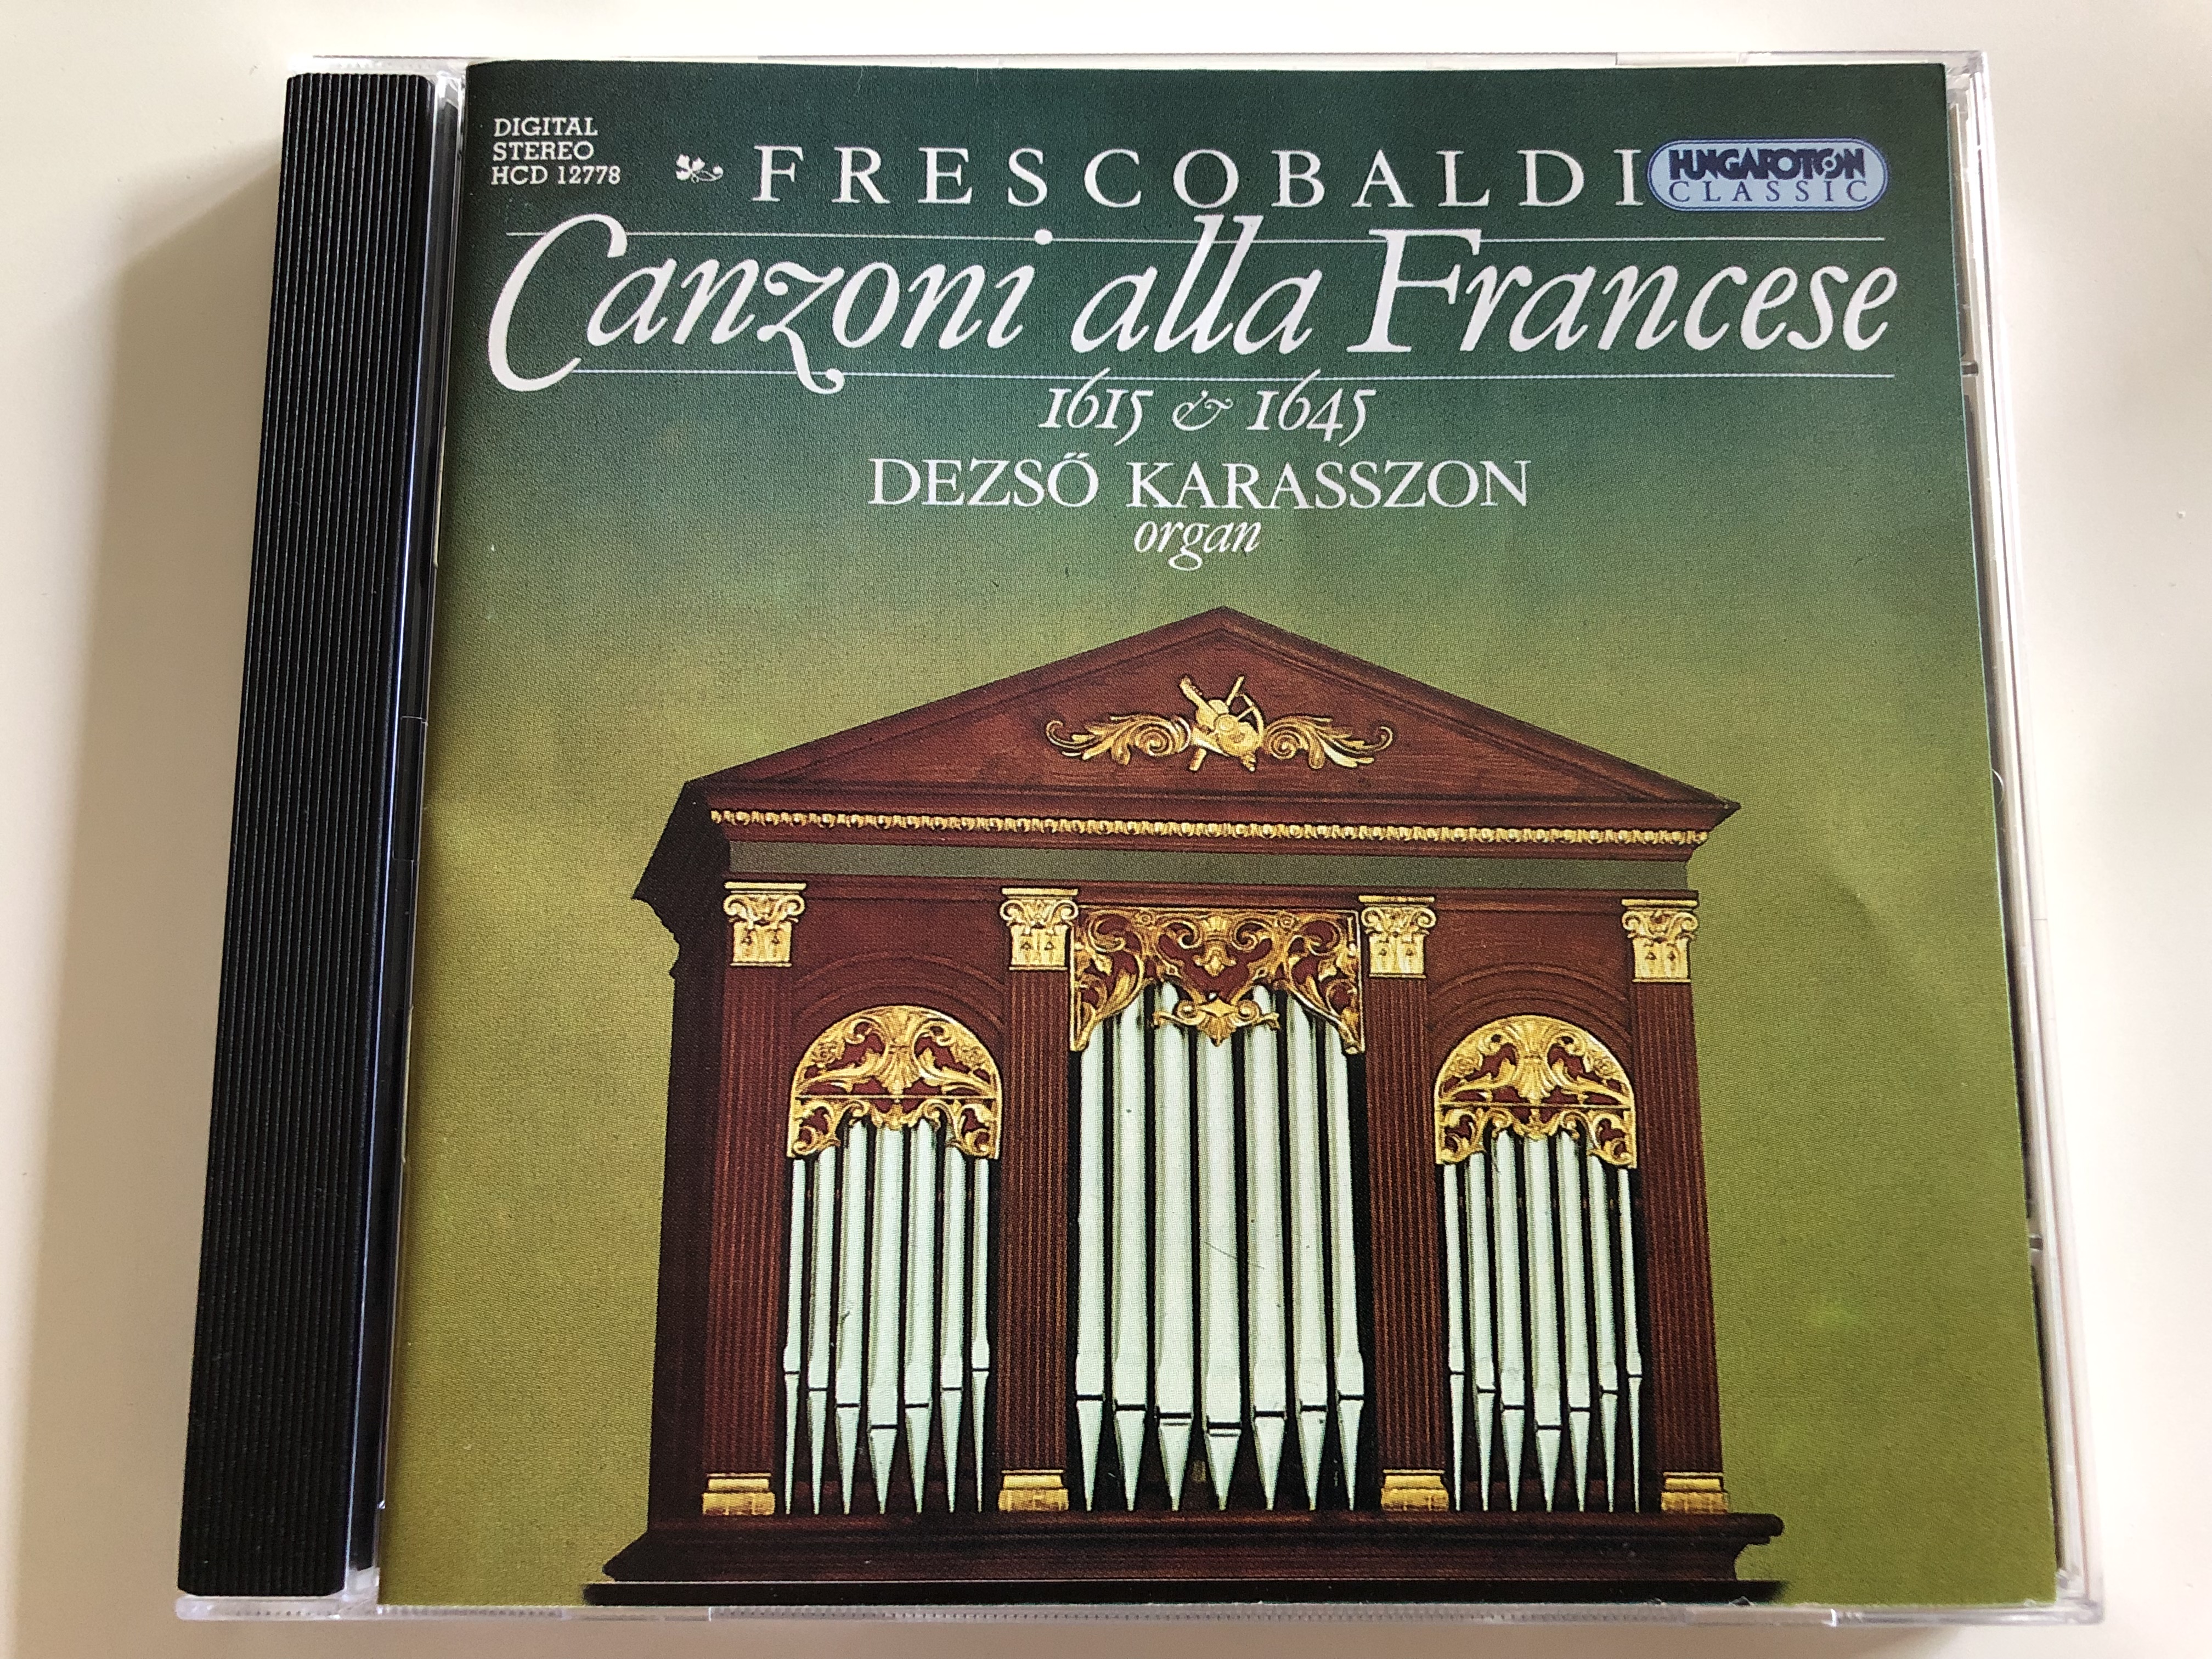 frescobaldi-canzoni-alla-francese-1615-1645-dezs-karasszon-organ-hungaroton-classic-hcd-12778-audio-cd-1996-1-.jpg